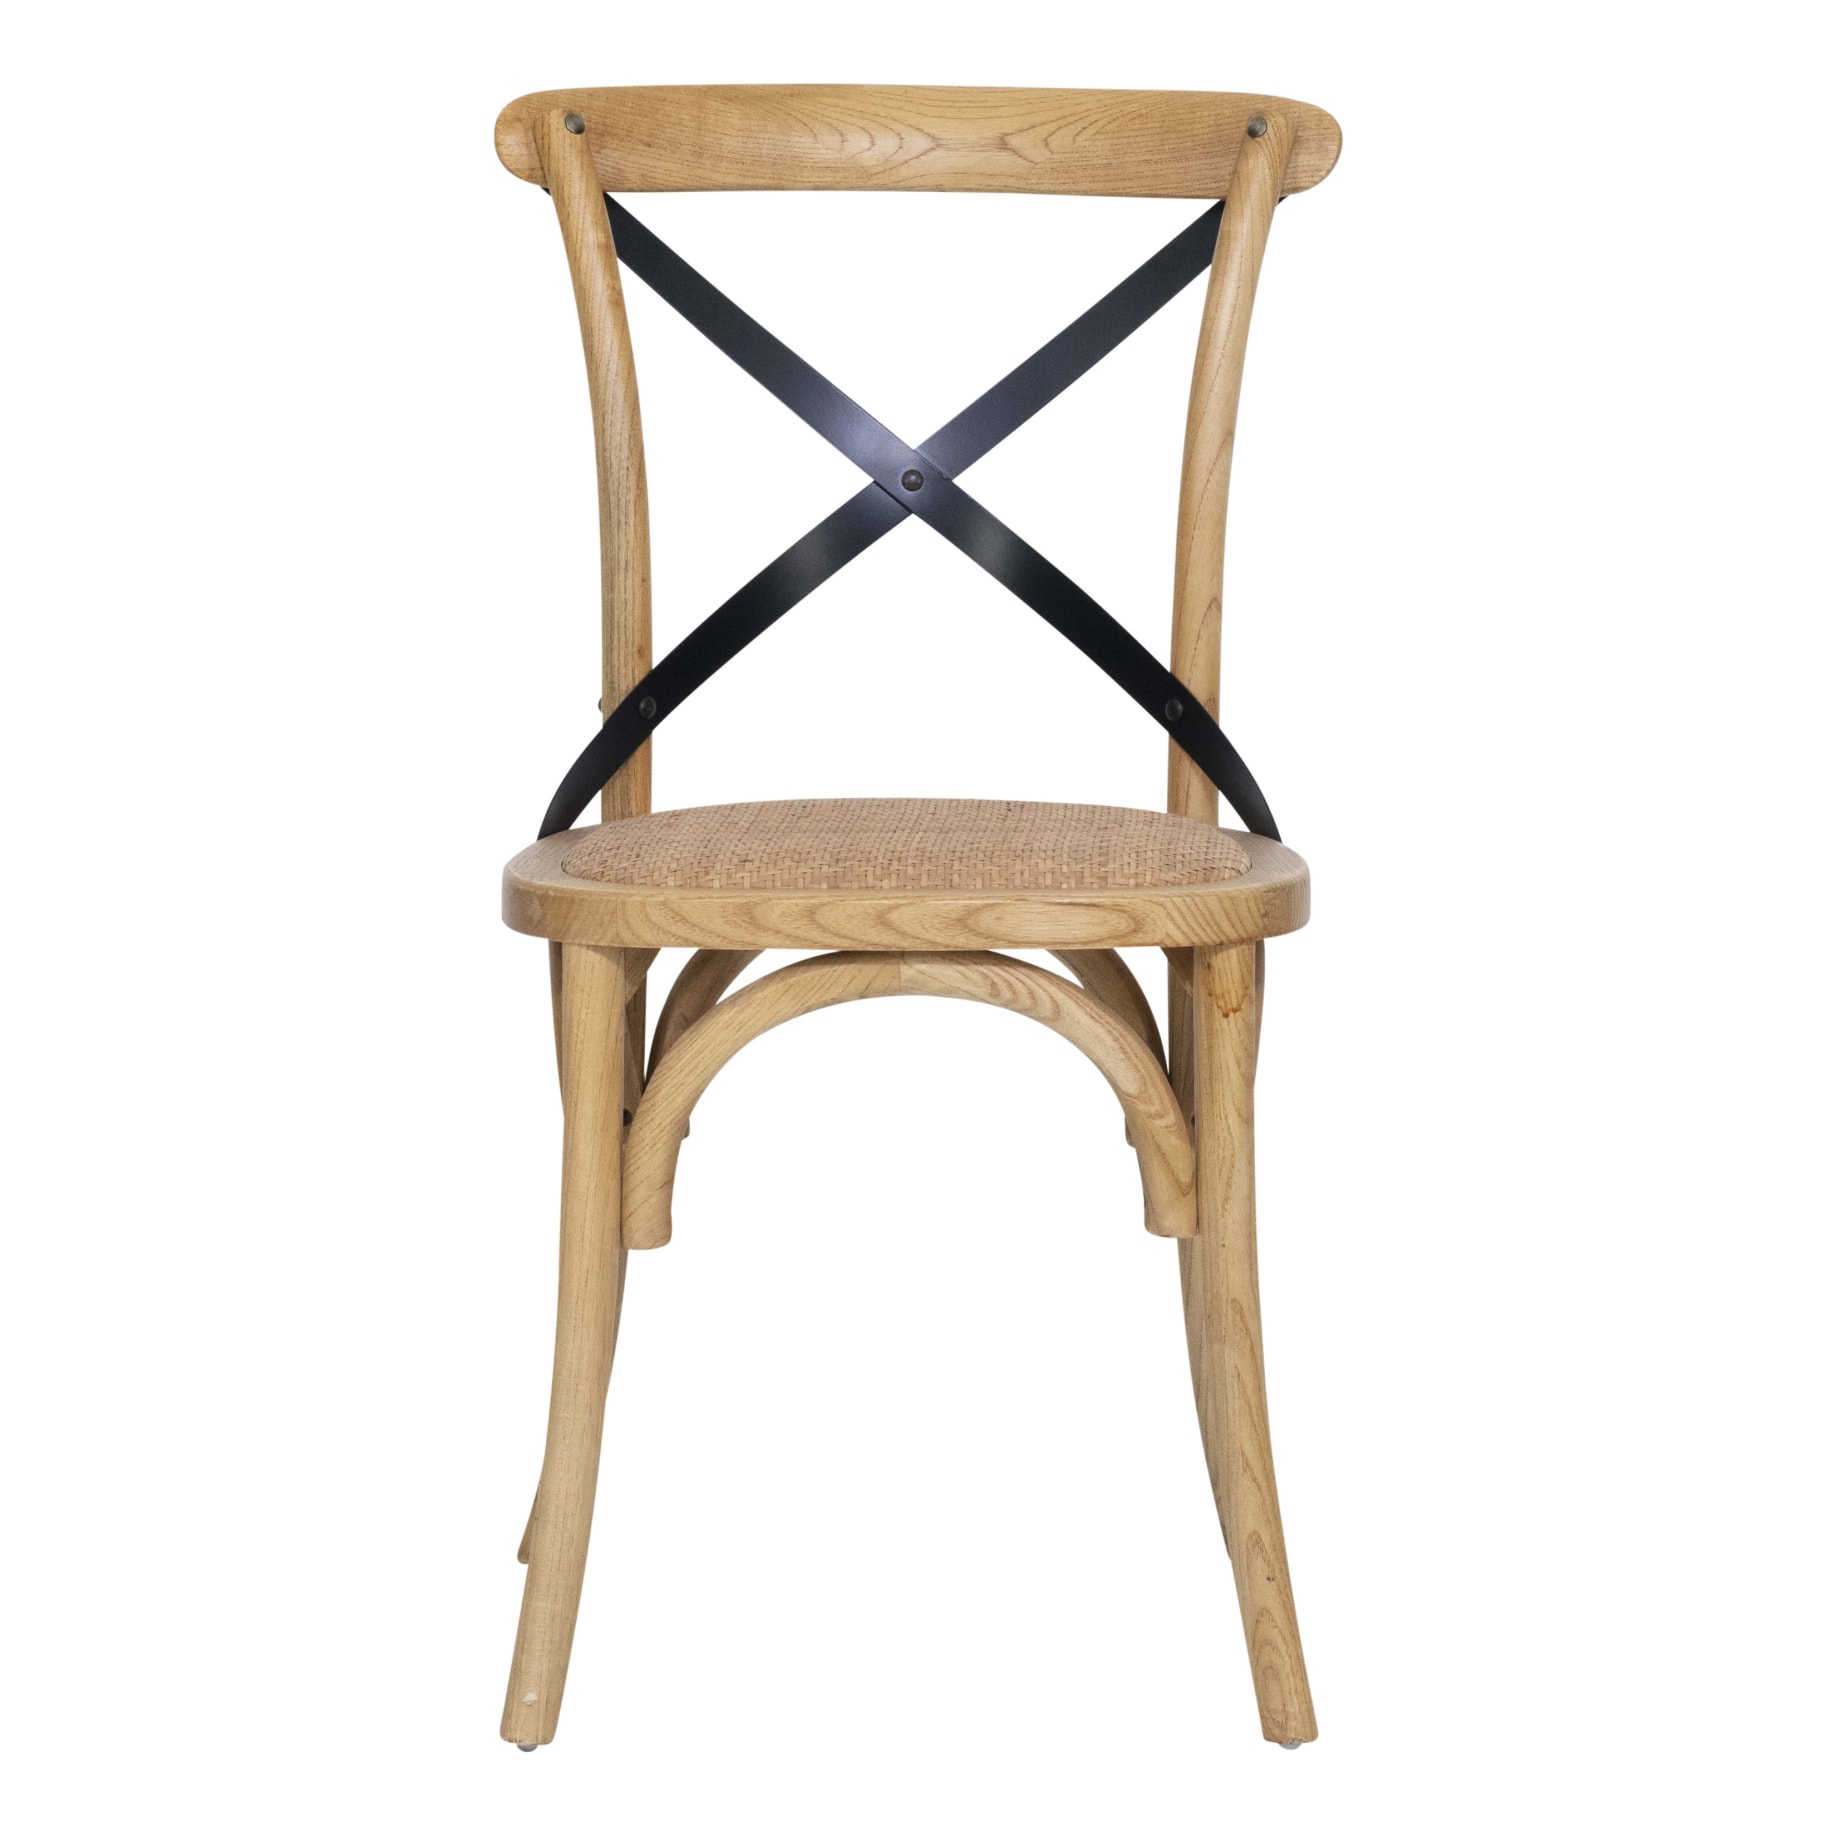 Cristo Cross Back Chair in Oak Stain / Black Strap / Rattan